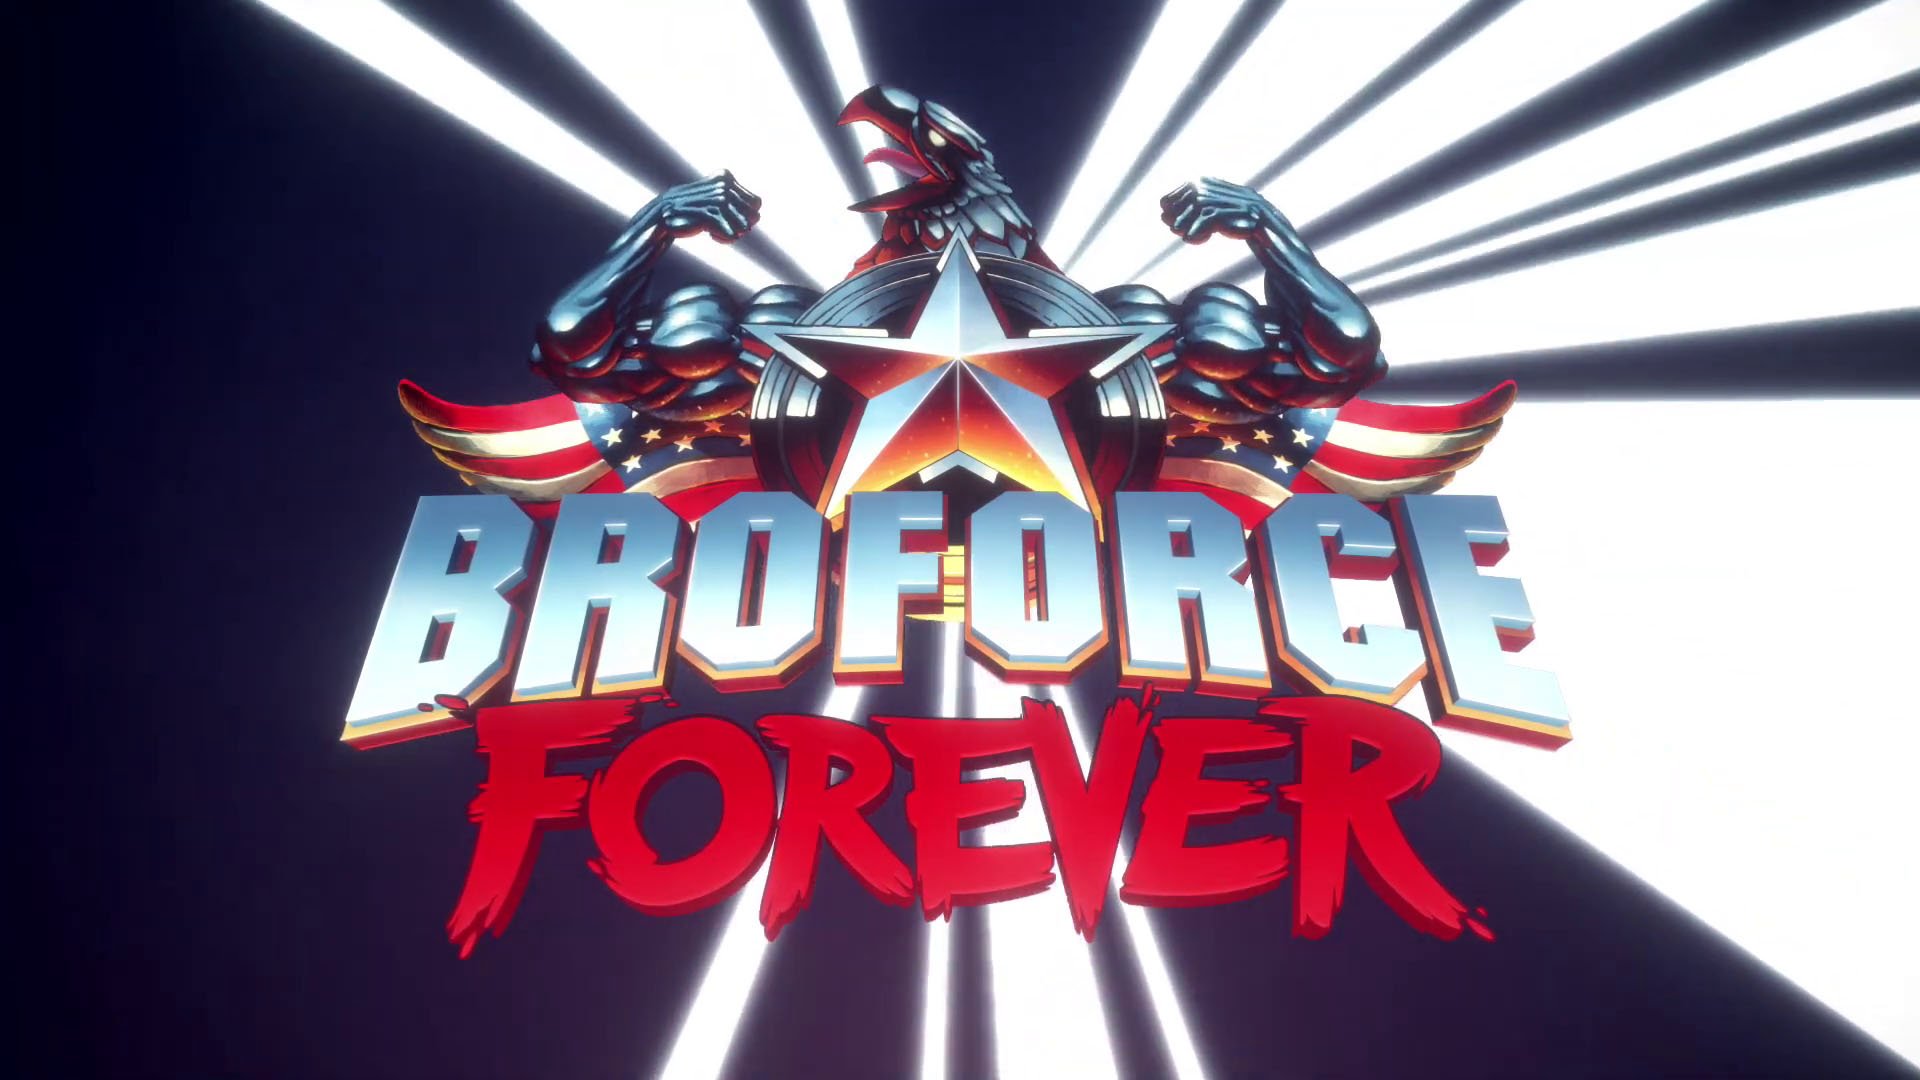 Broforce Forever update - adds new bros, missions - Gematsu